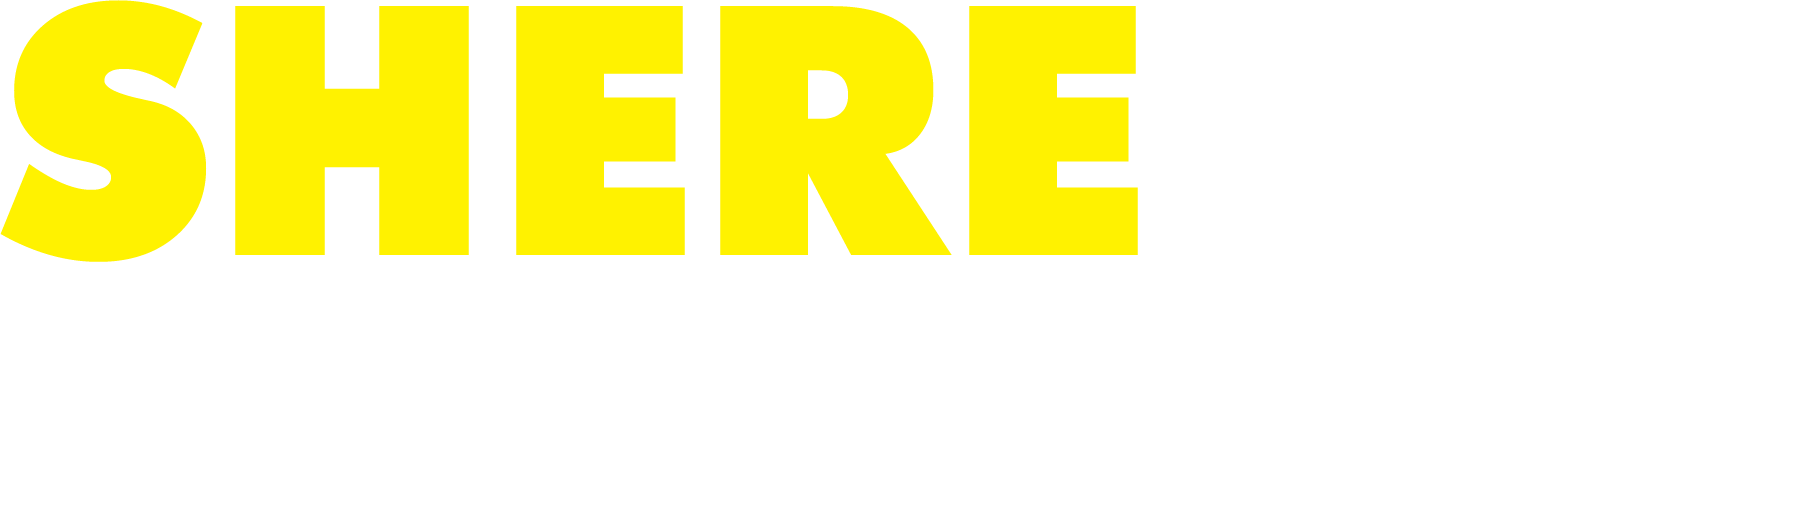 Shere Hill Climb 2022